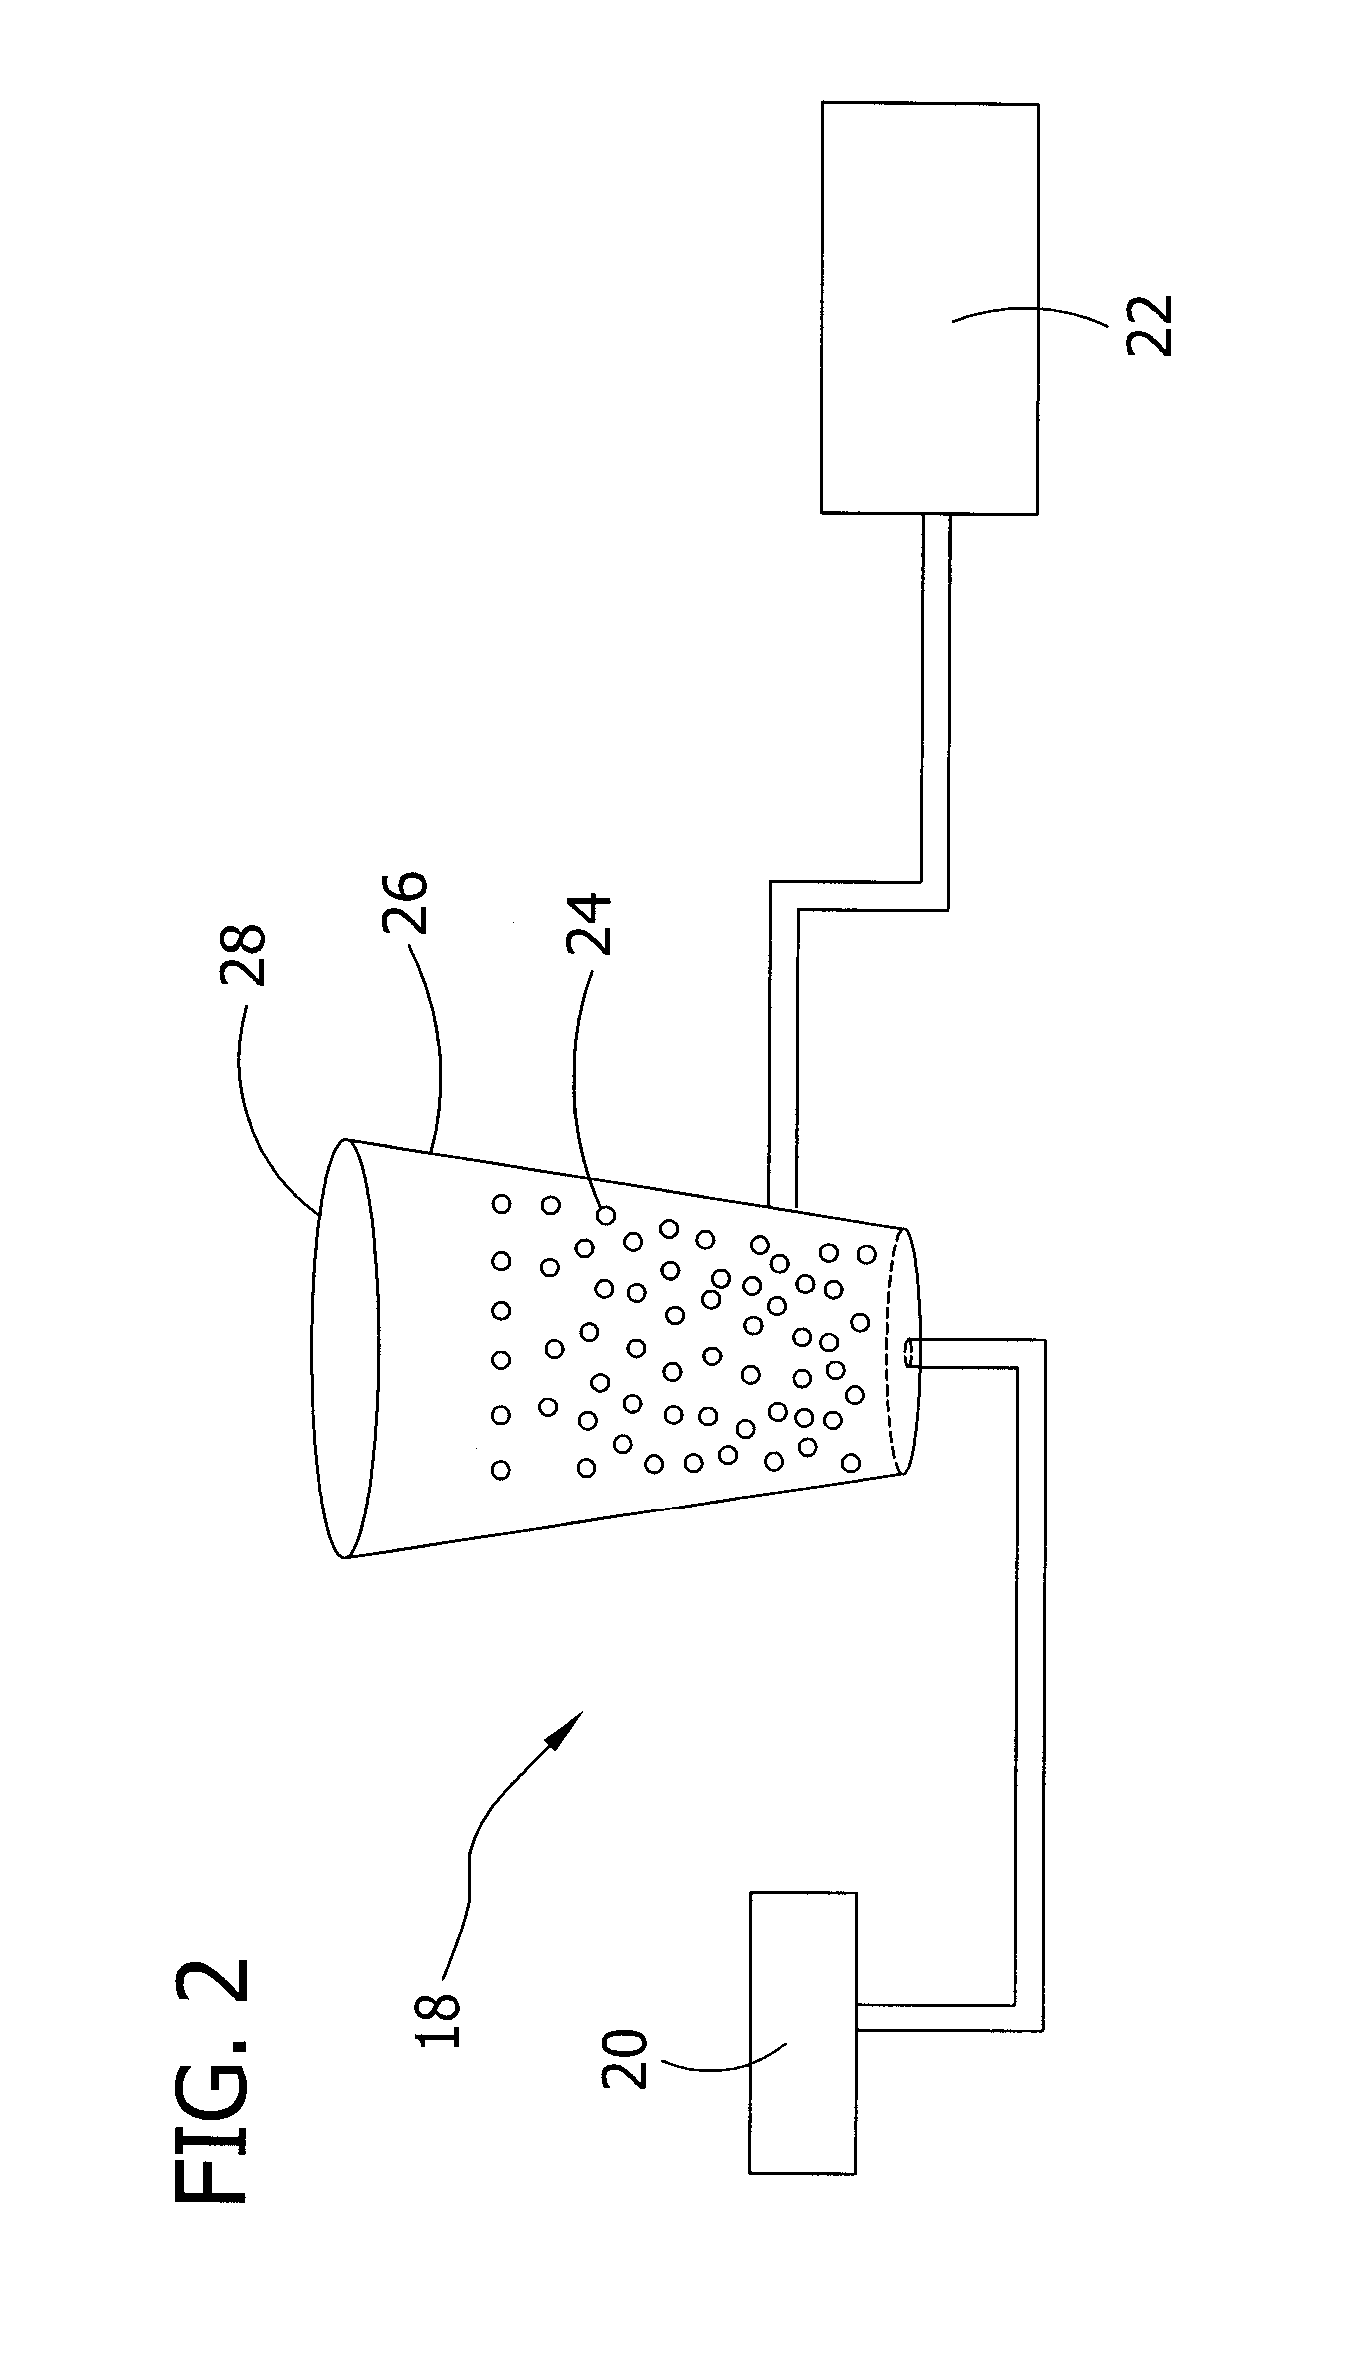 Dispensing system for dispensing warm wet wipes